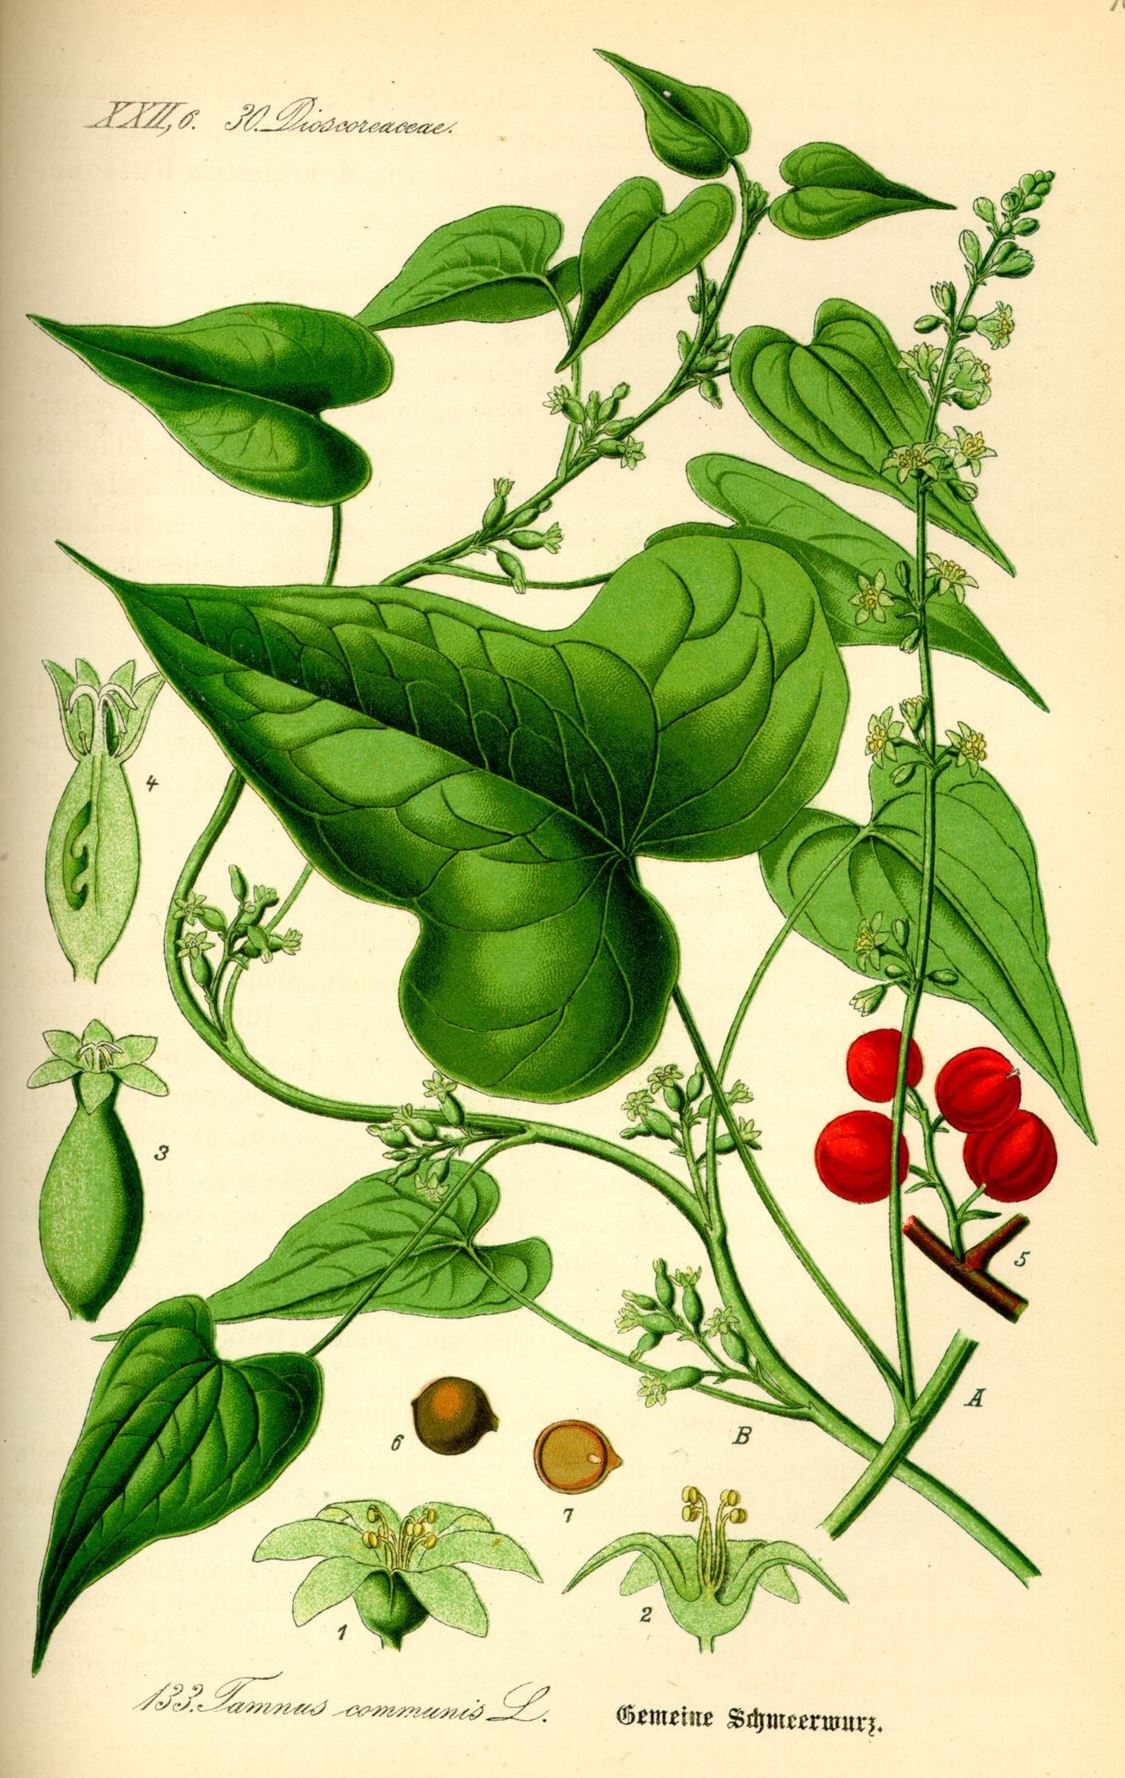 Dioscorea communis - Spekwortel, black bryony